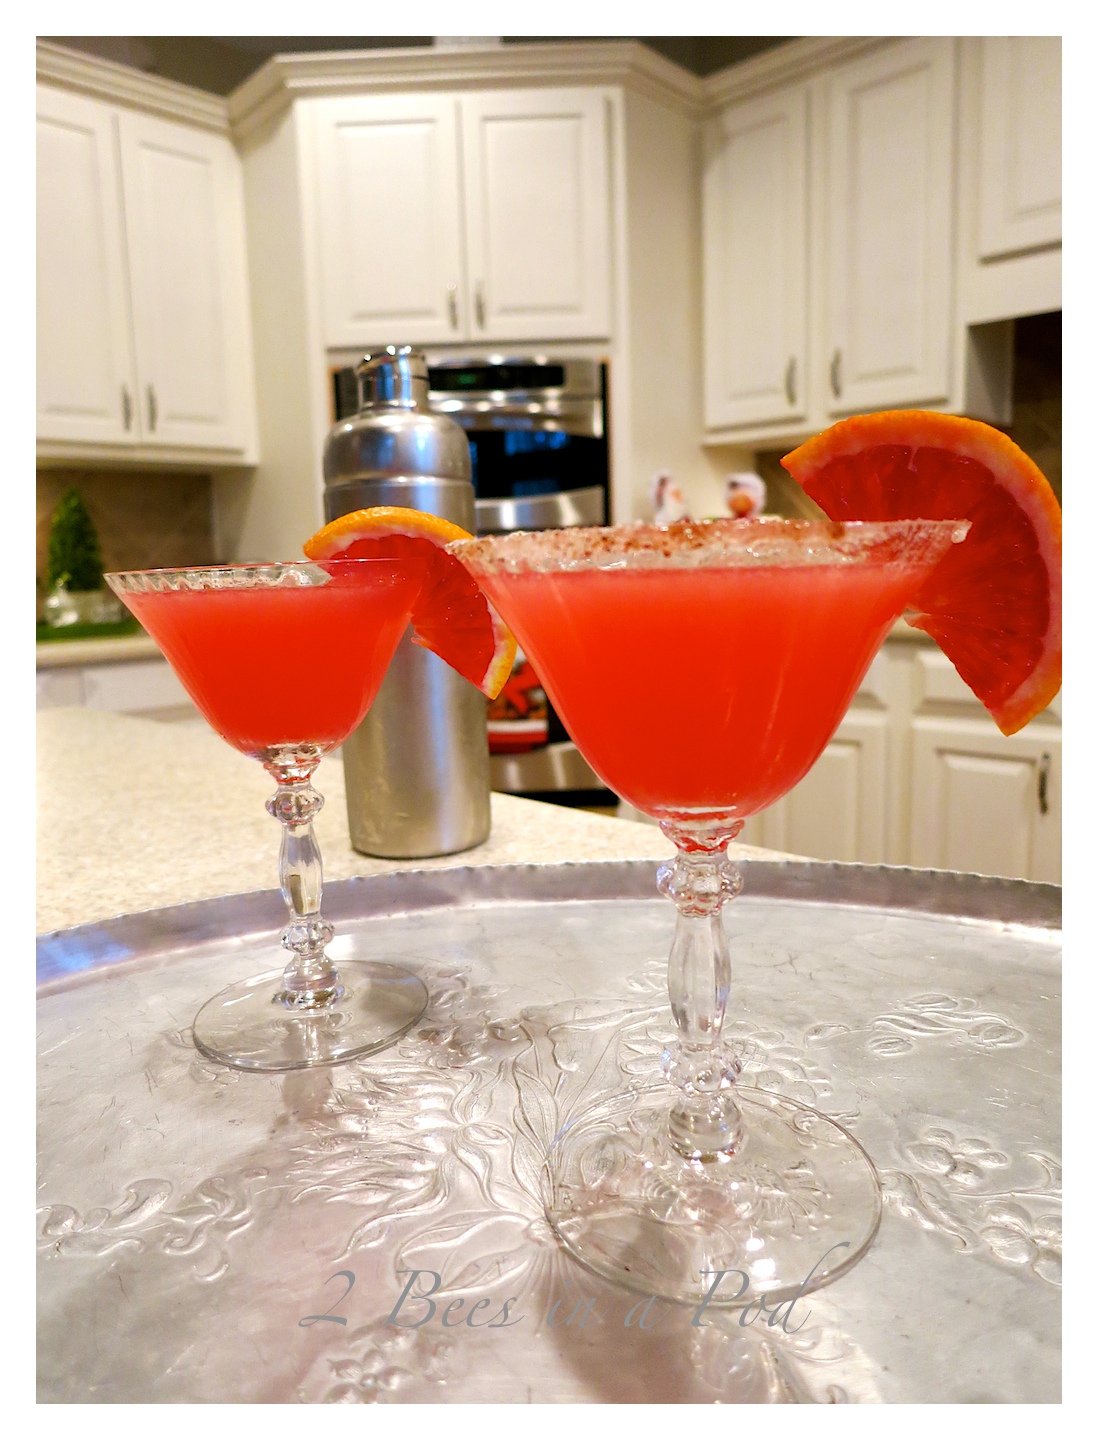 Yummy Blood Orange Martini - the perfect Christmas cocktail. Fresh squeezed Blood Orange juice, vodka, orange liquor and simple syrup.